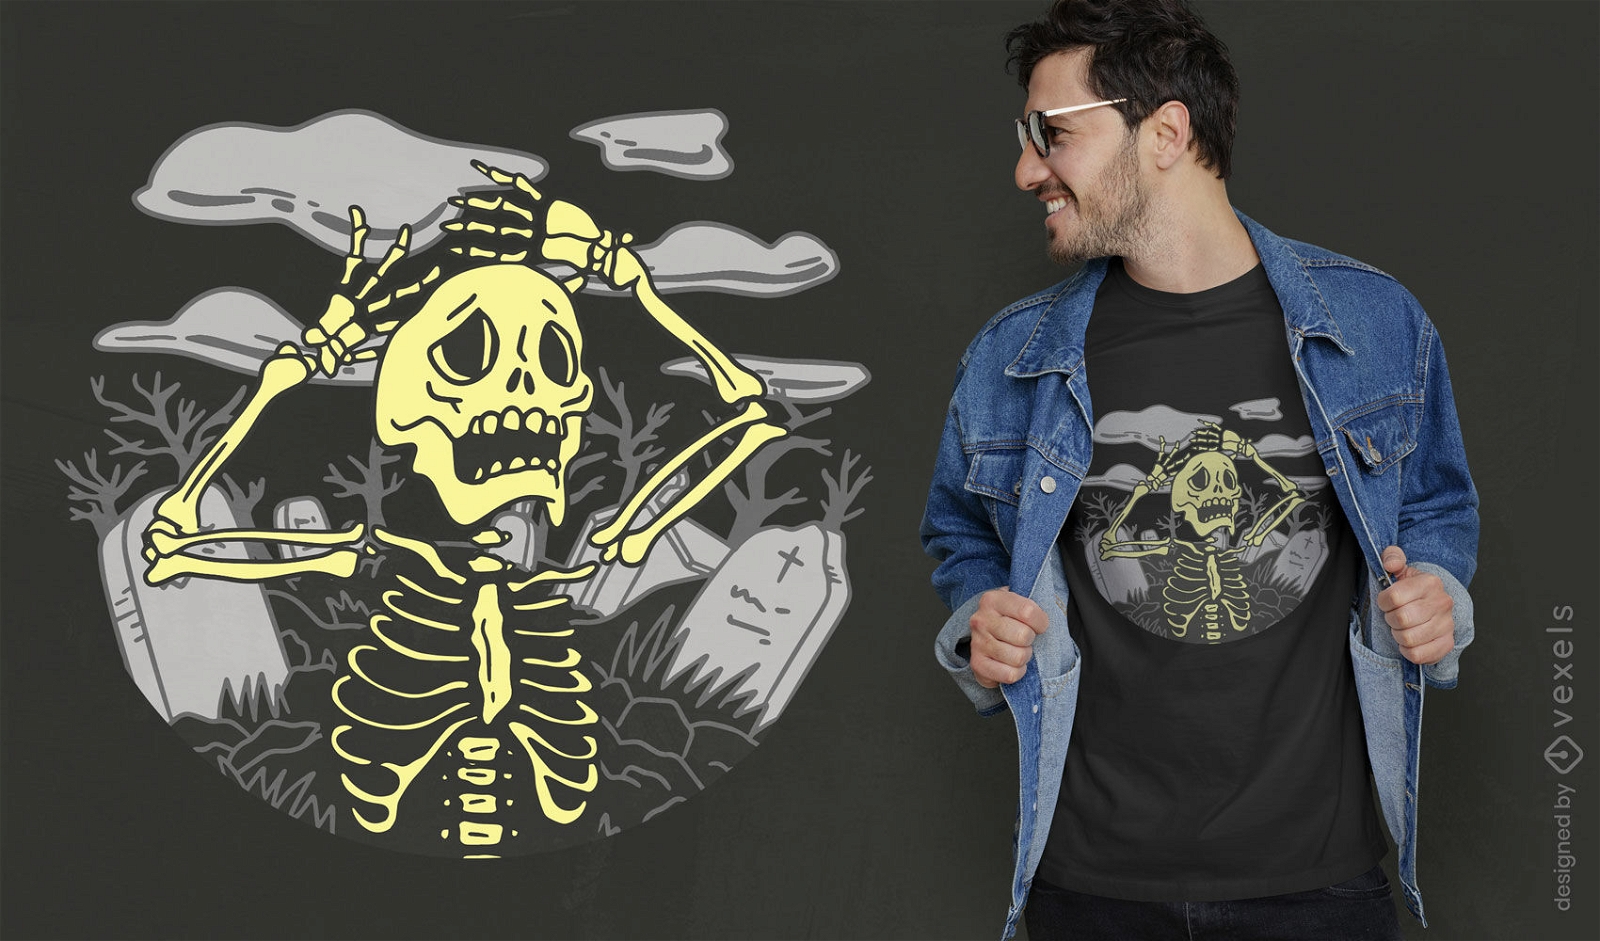 Graveyard skeleton t-shirt design